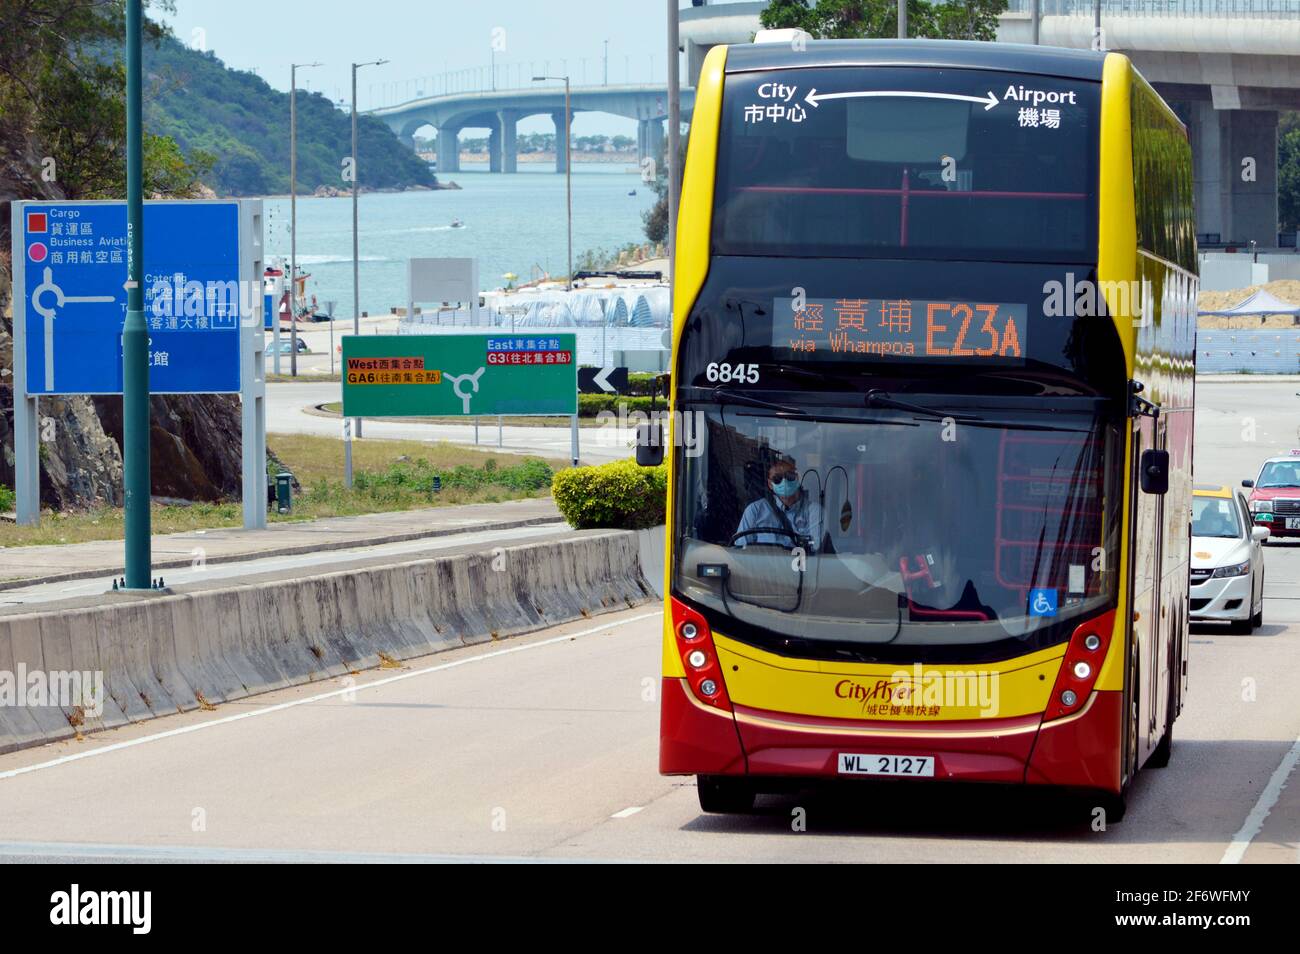 Cityflyer (城巴機場快線) Alexander Dennis Enviro500 MMC bus on Chek Lap Kok South Road (赤鱲角南路), Hong Kong Stock Photo